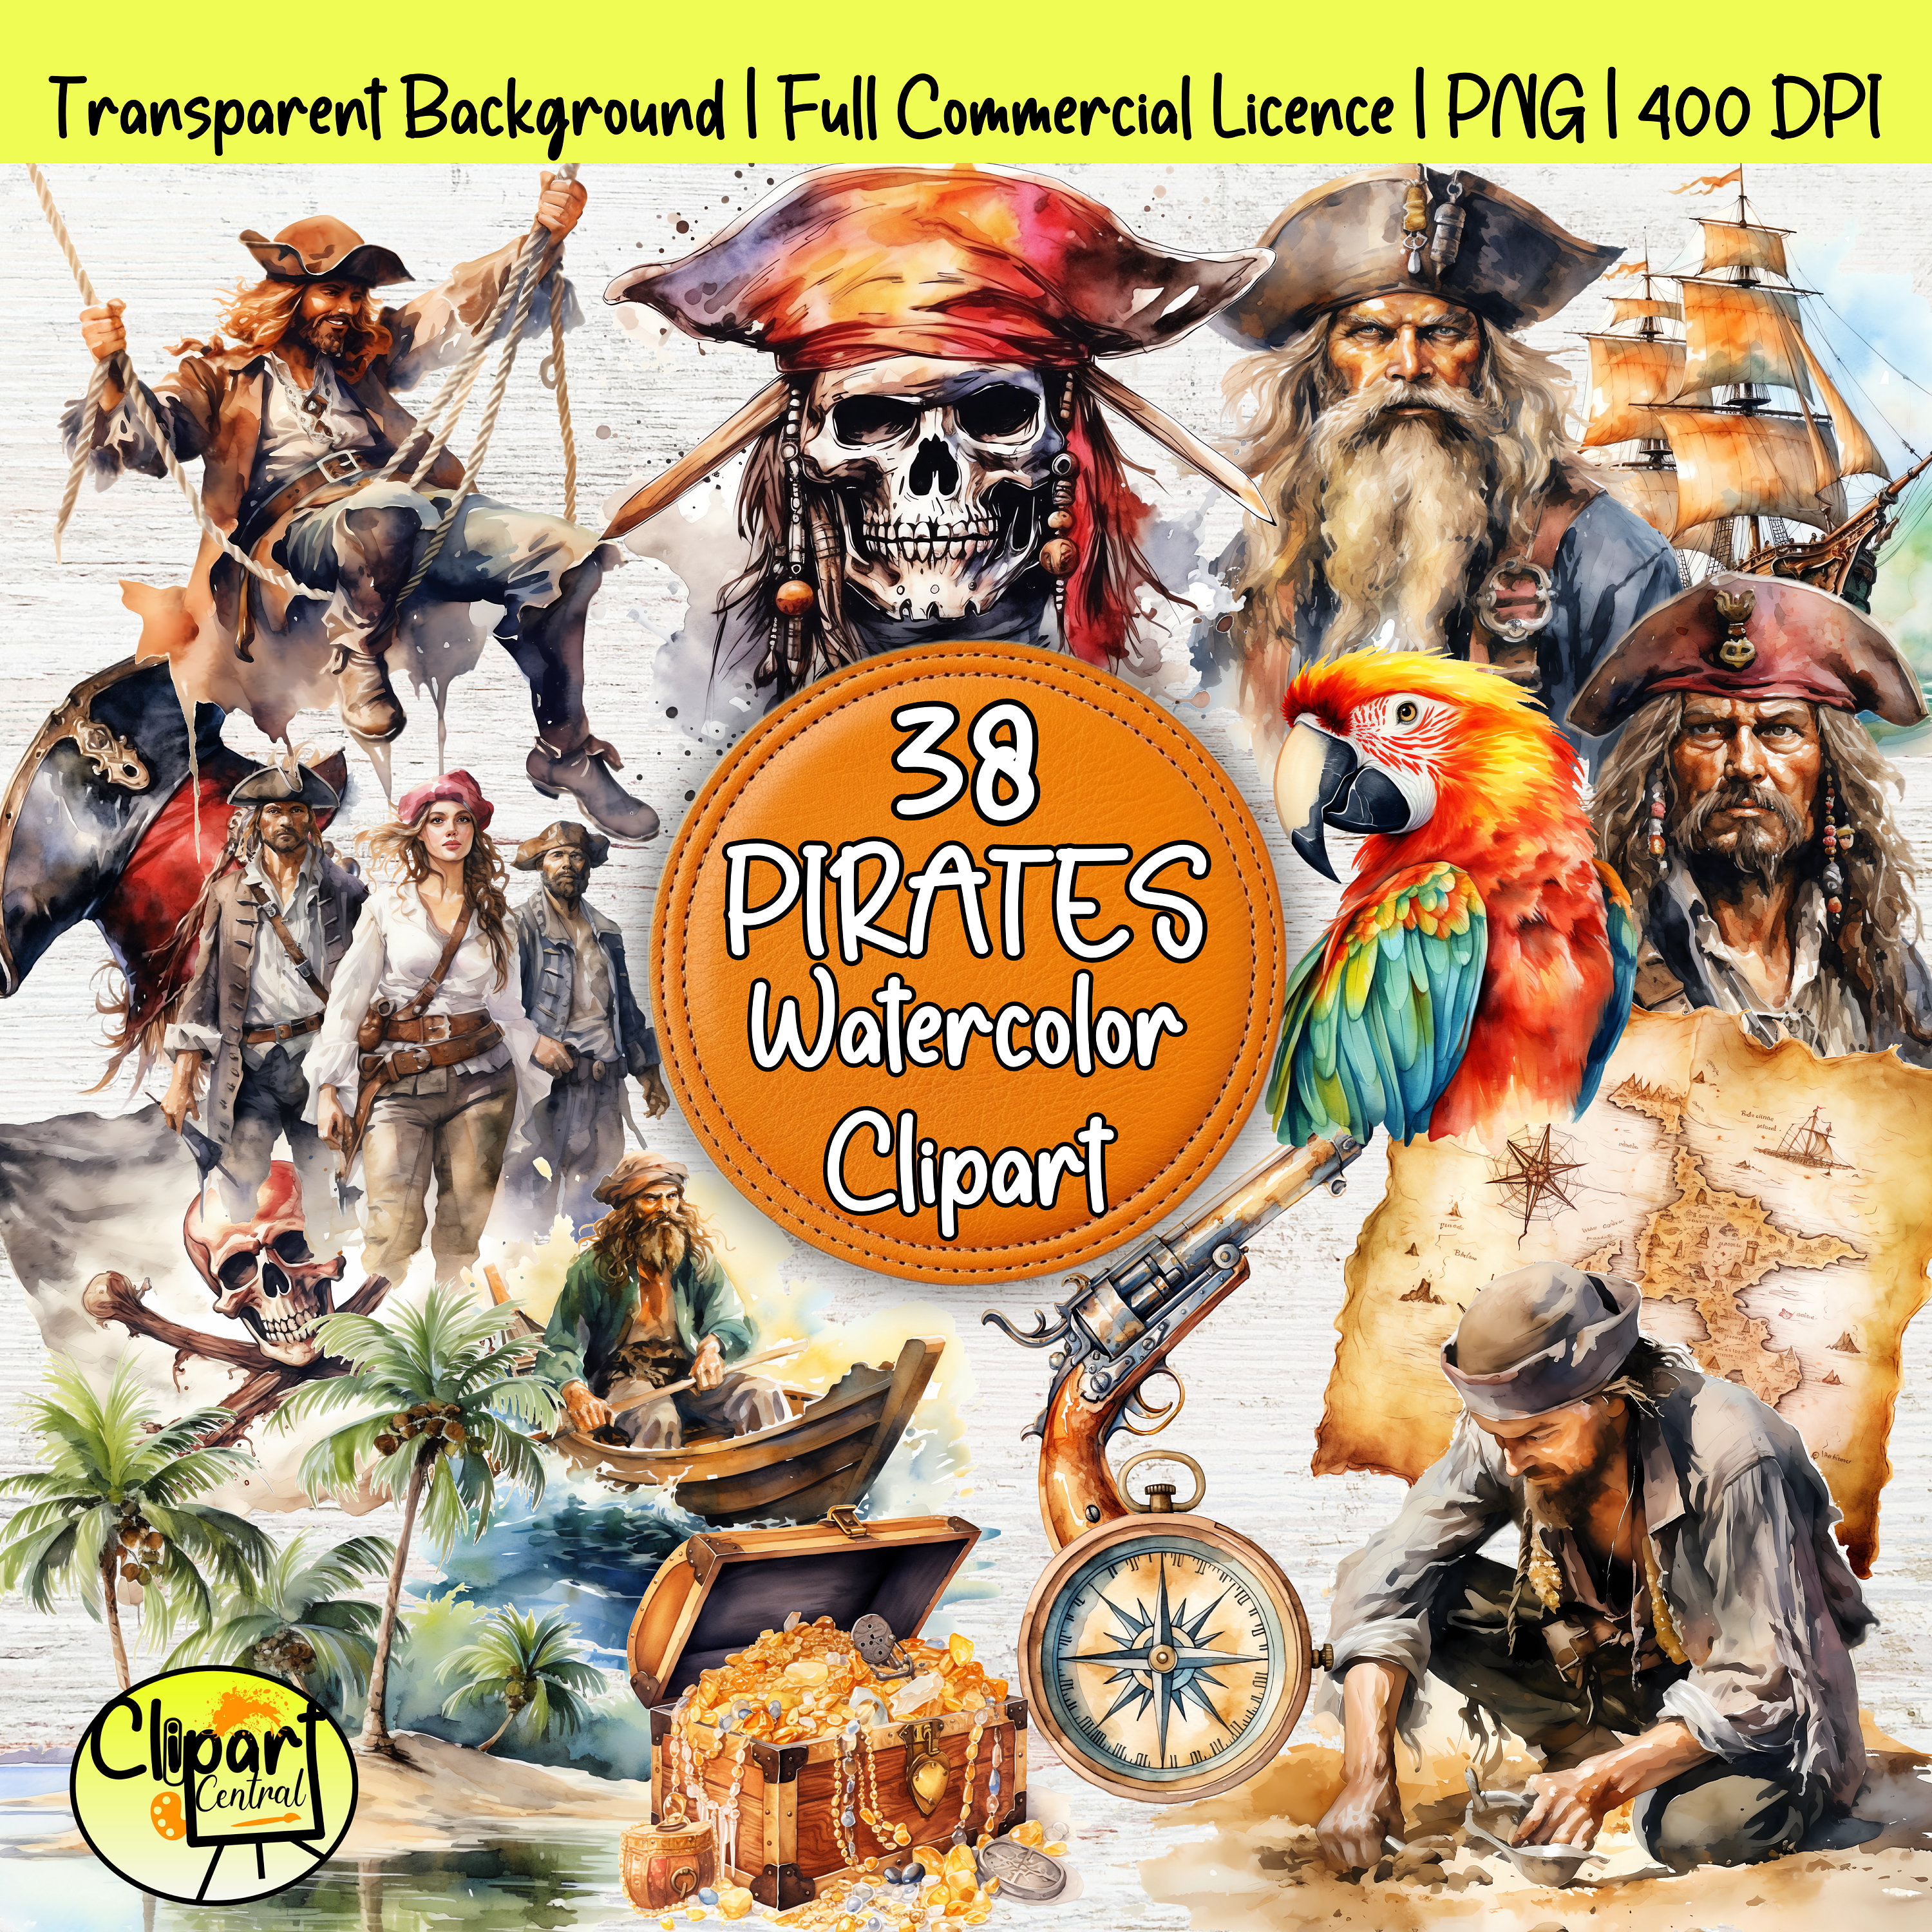 East Carolina Pirates Pirate Flag Large 3x5